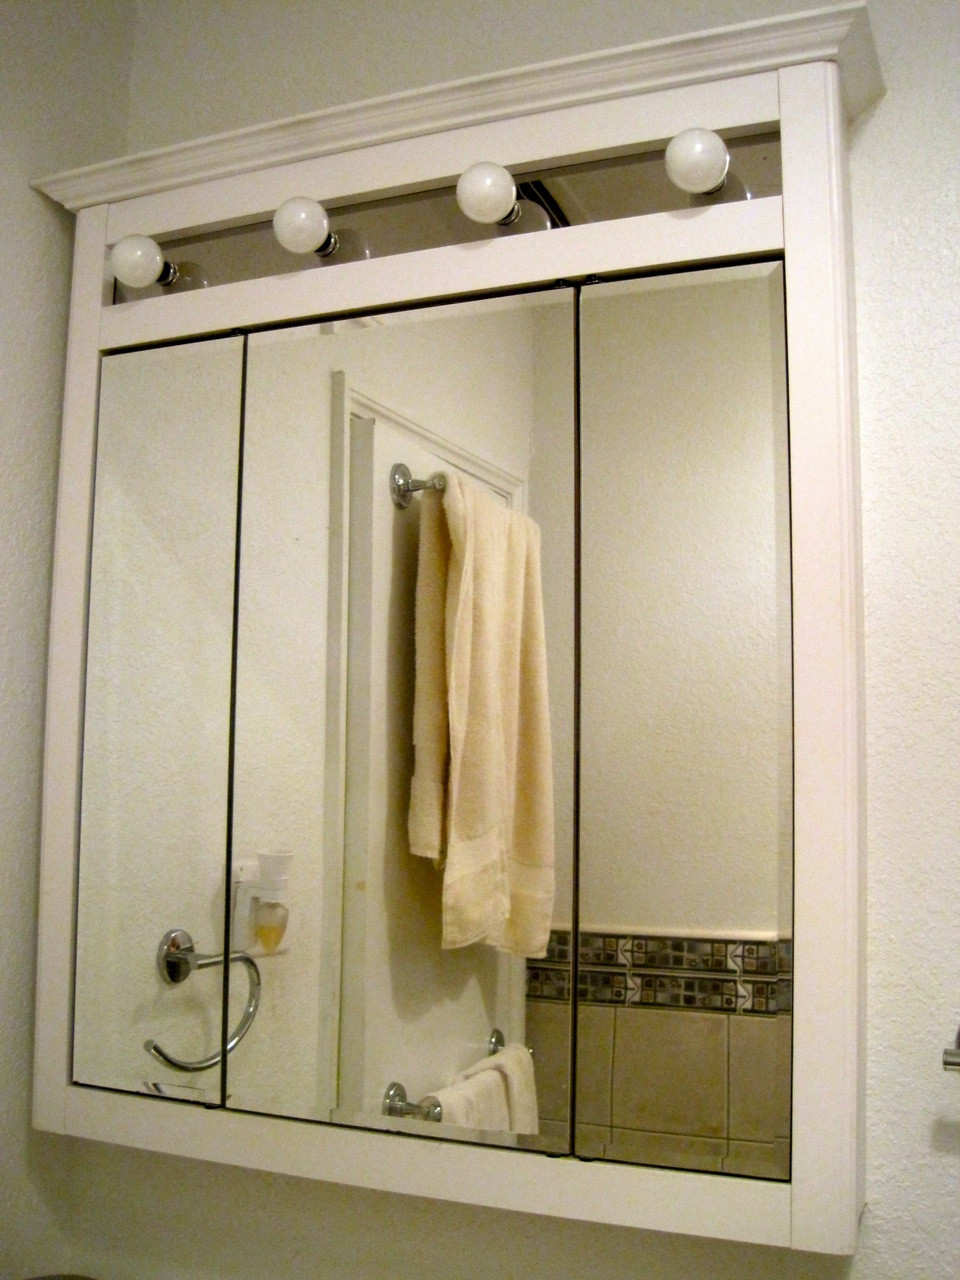 Bathroom Mirror Cabinet With Light
 In Wall Medicine Cabinet Ideas – HomesFeed